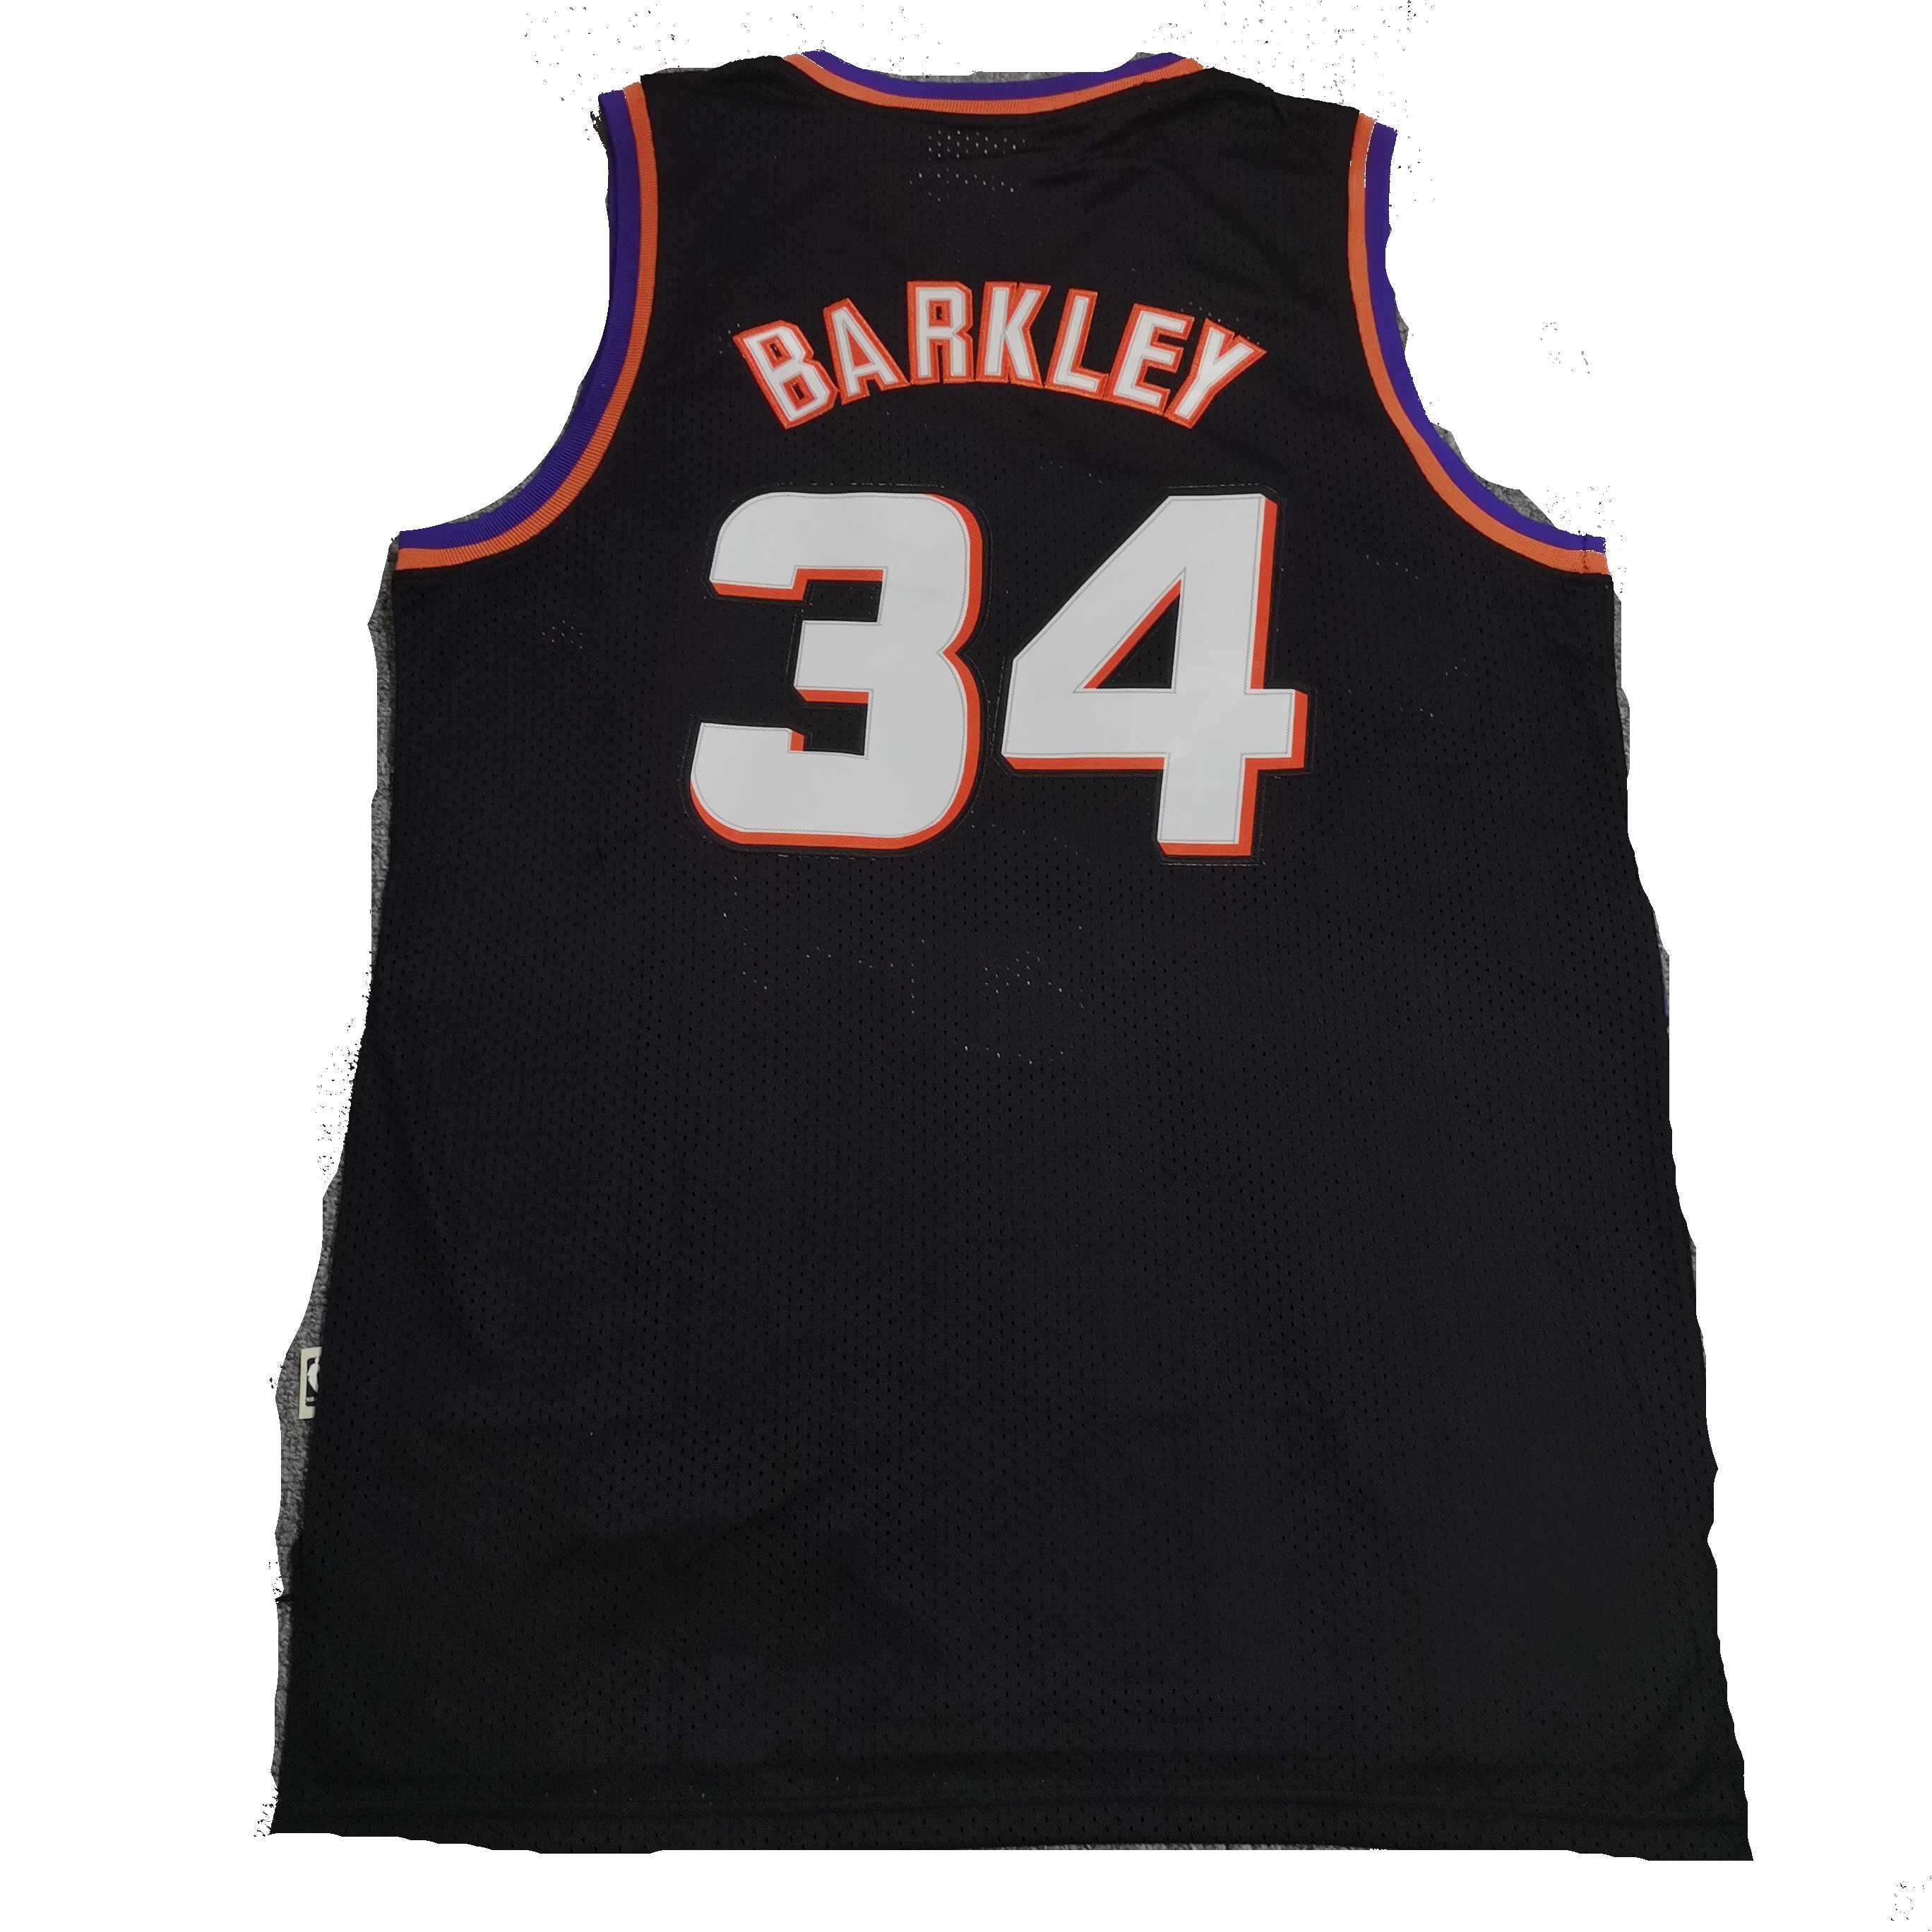 Charles Barkley Suns Jersey Black Men's New Adult Large Adidas